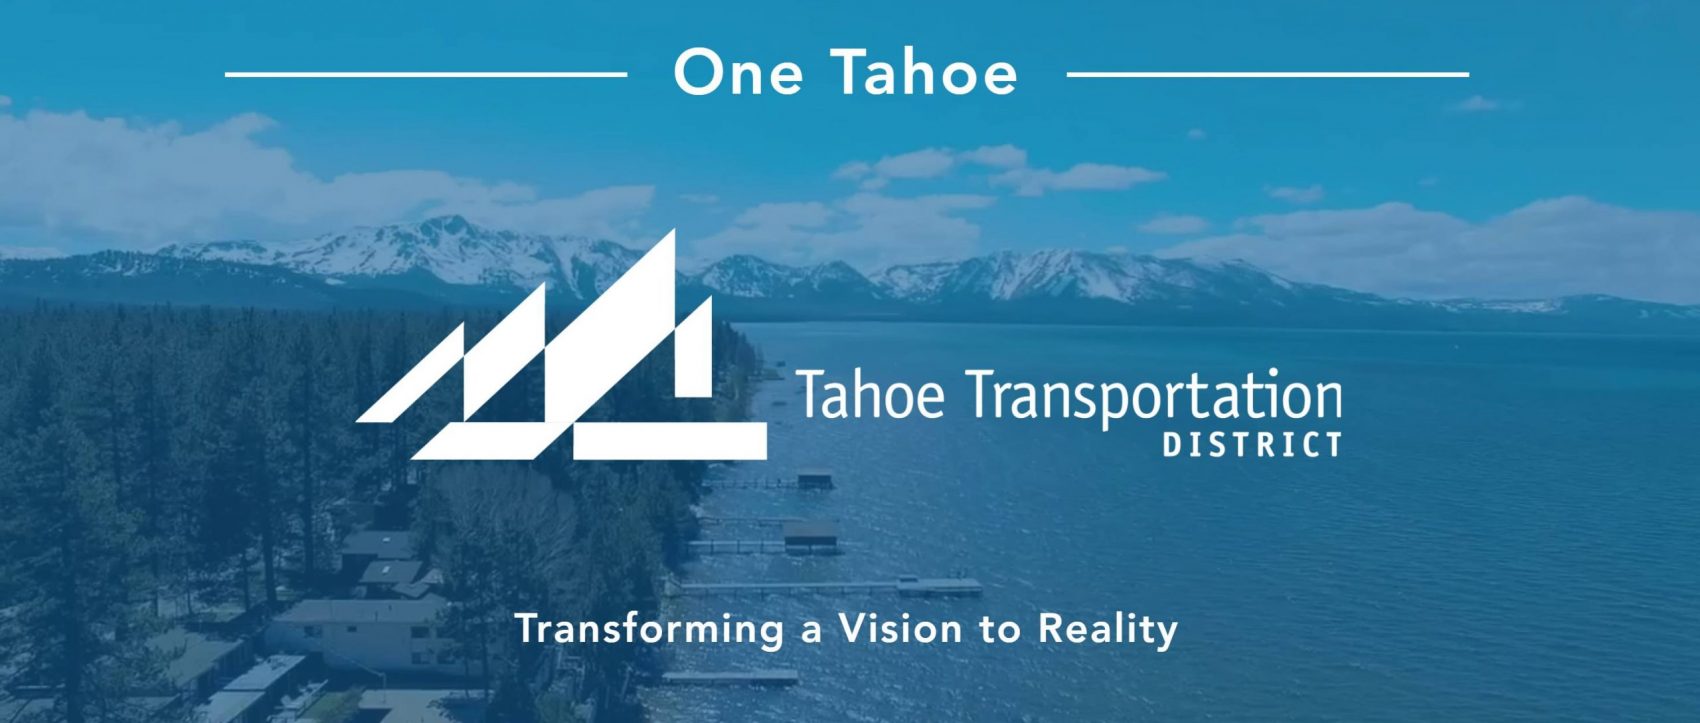 One Tahoe